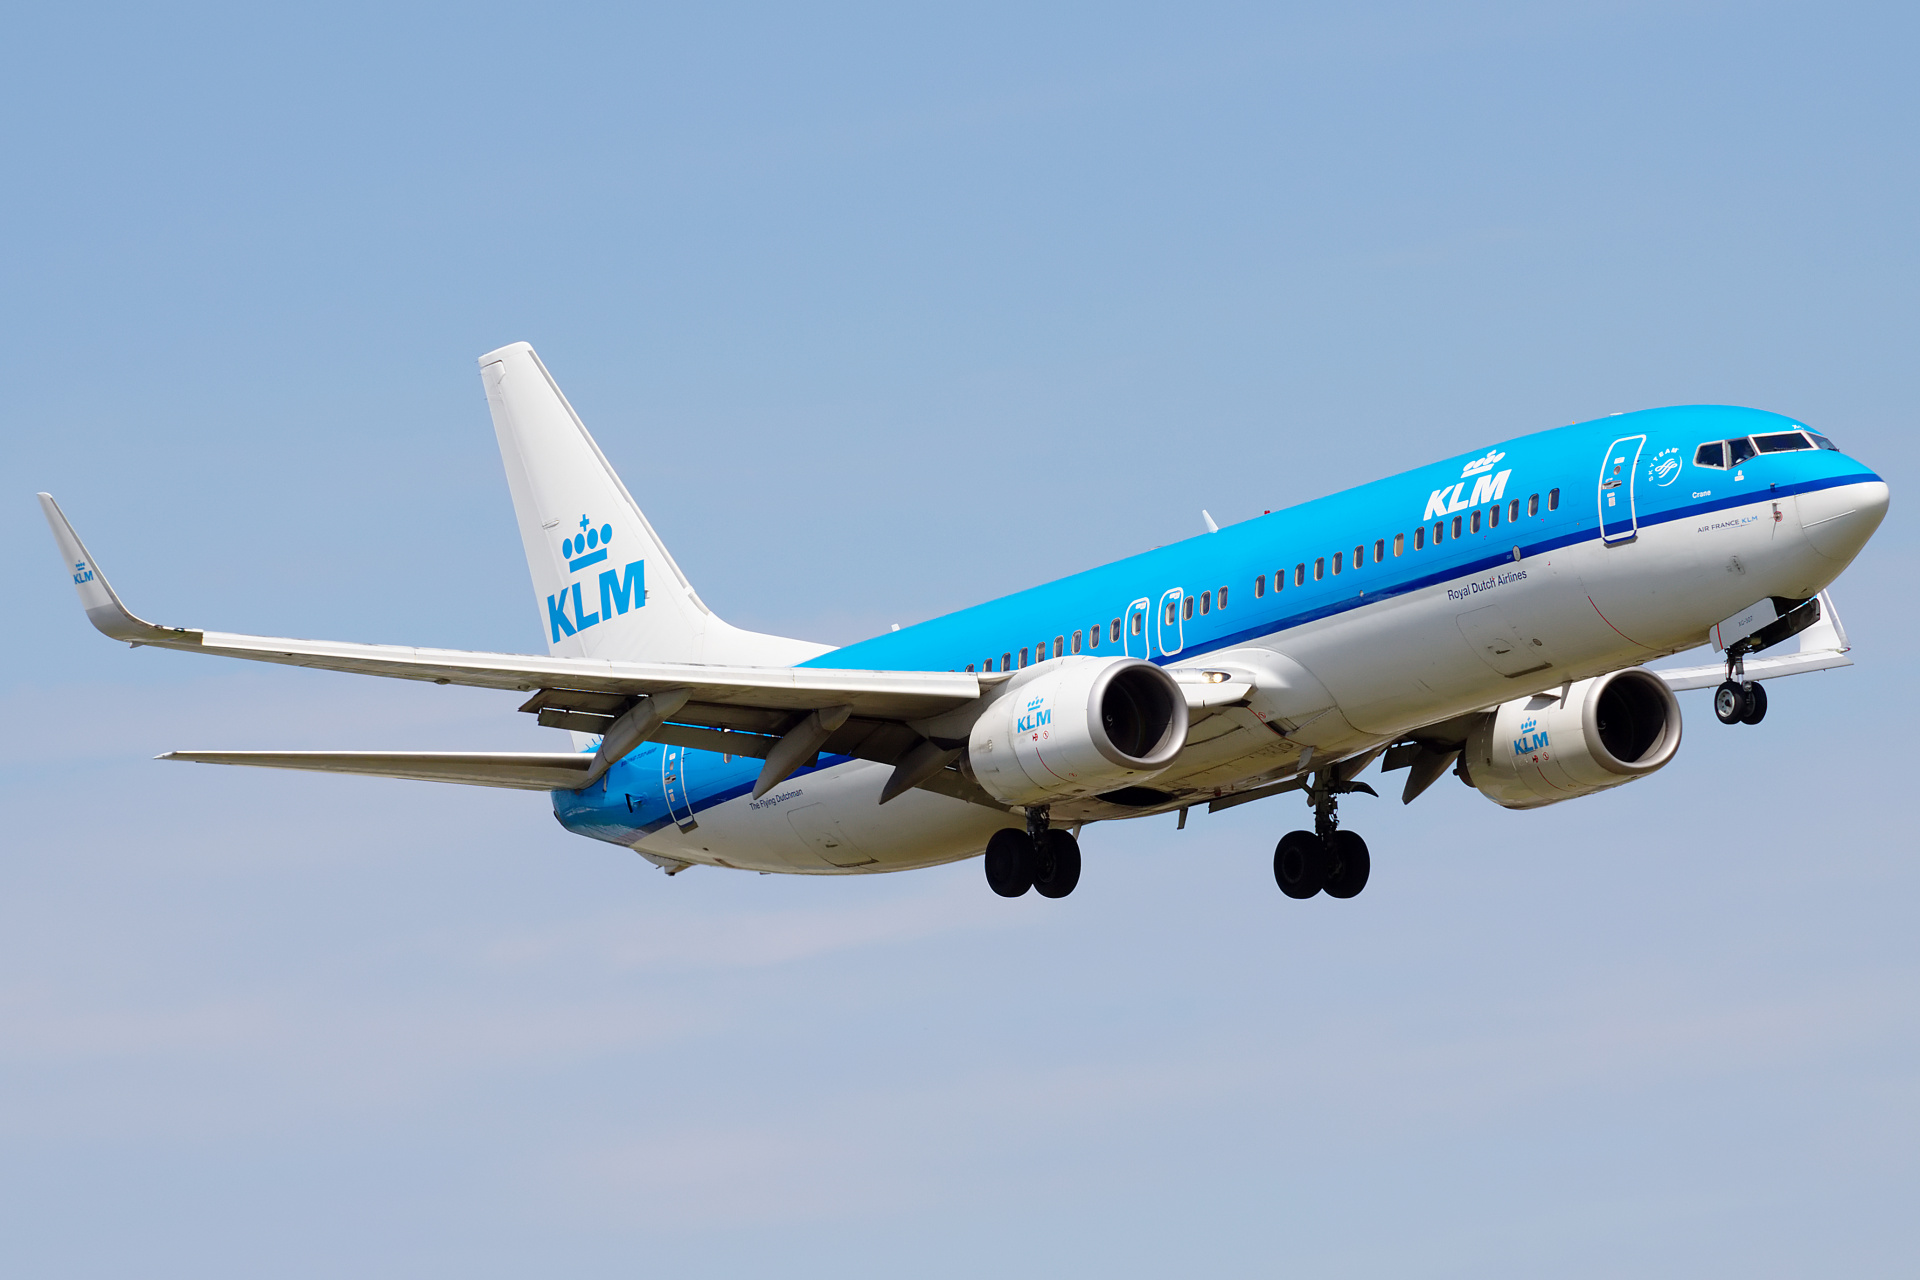 PH-BXG (Aircraft » EPWA Spotting » Boeing 737-800 » KLM Royal Dutch Airlines)